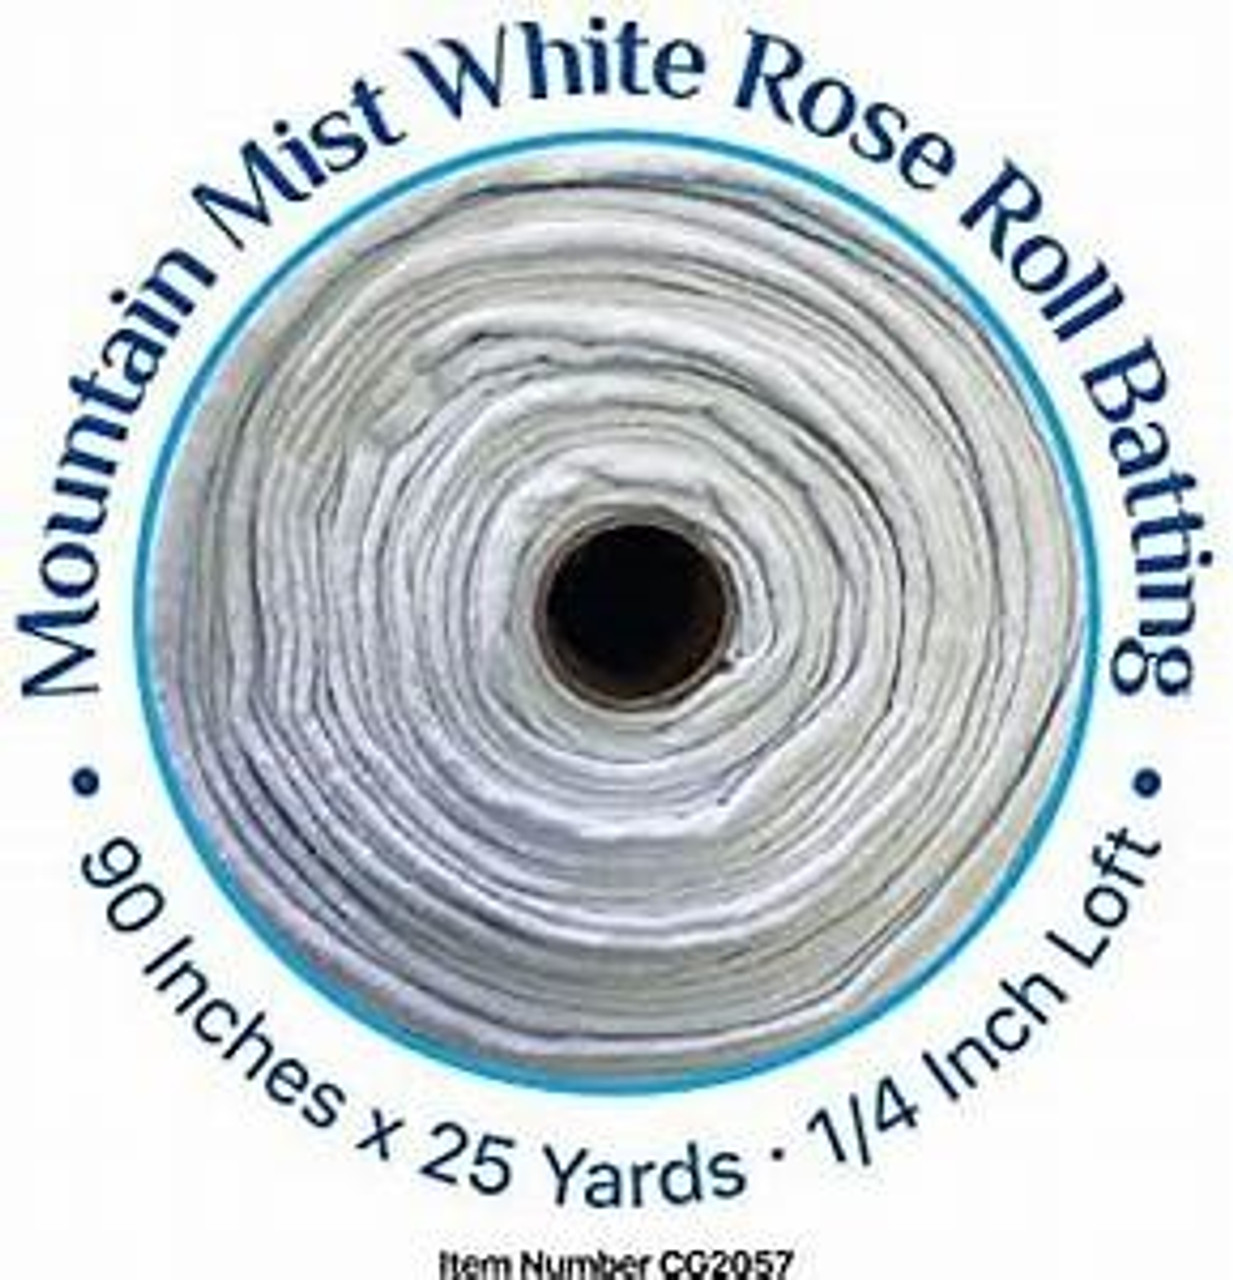 Mountain Mist White Rose Cotton Needlepunch Batting